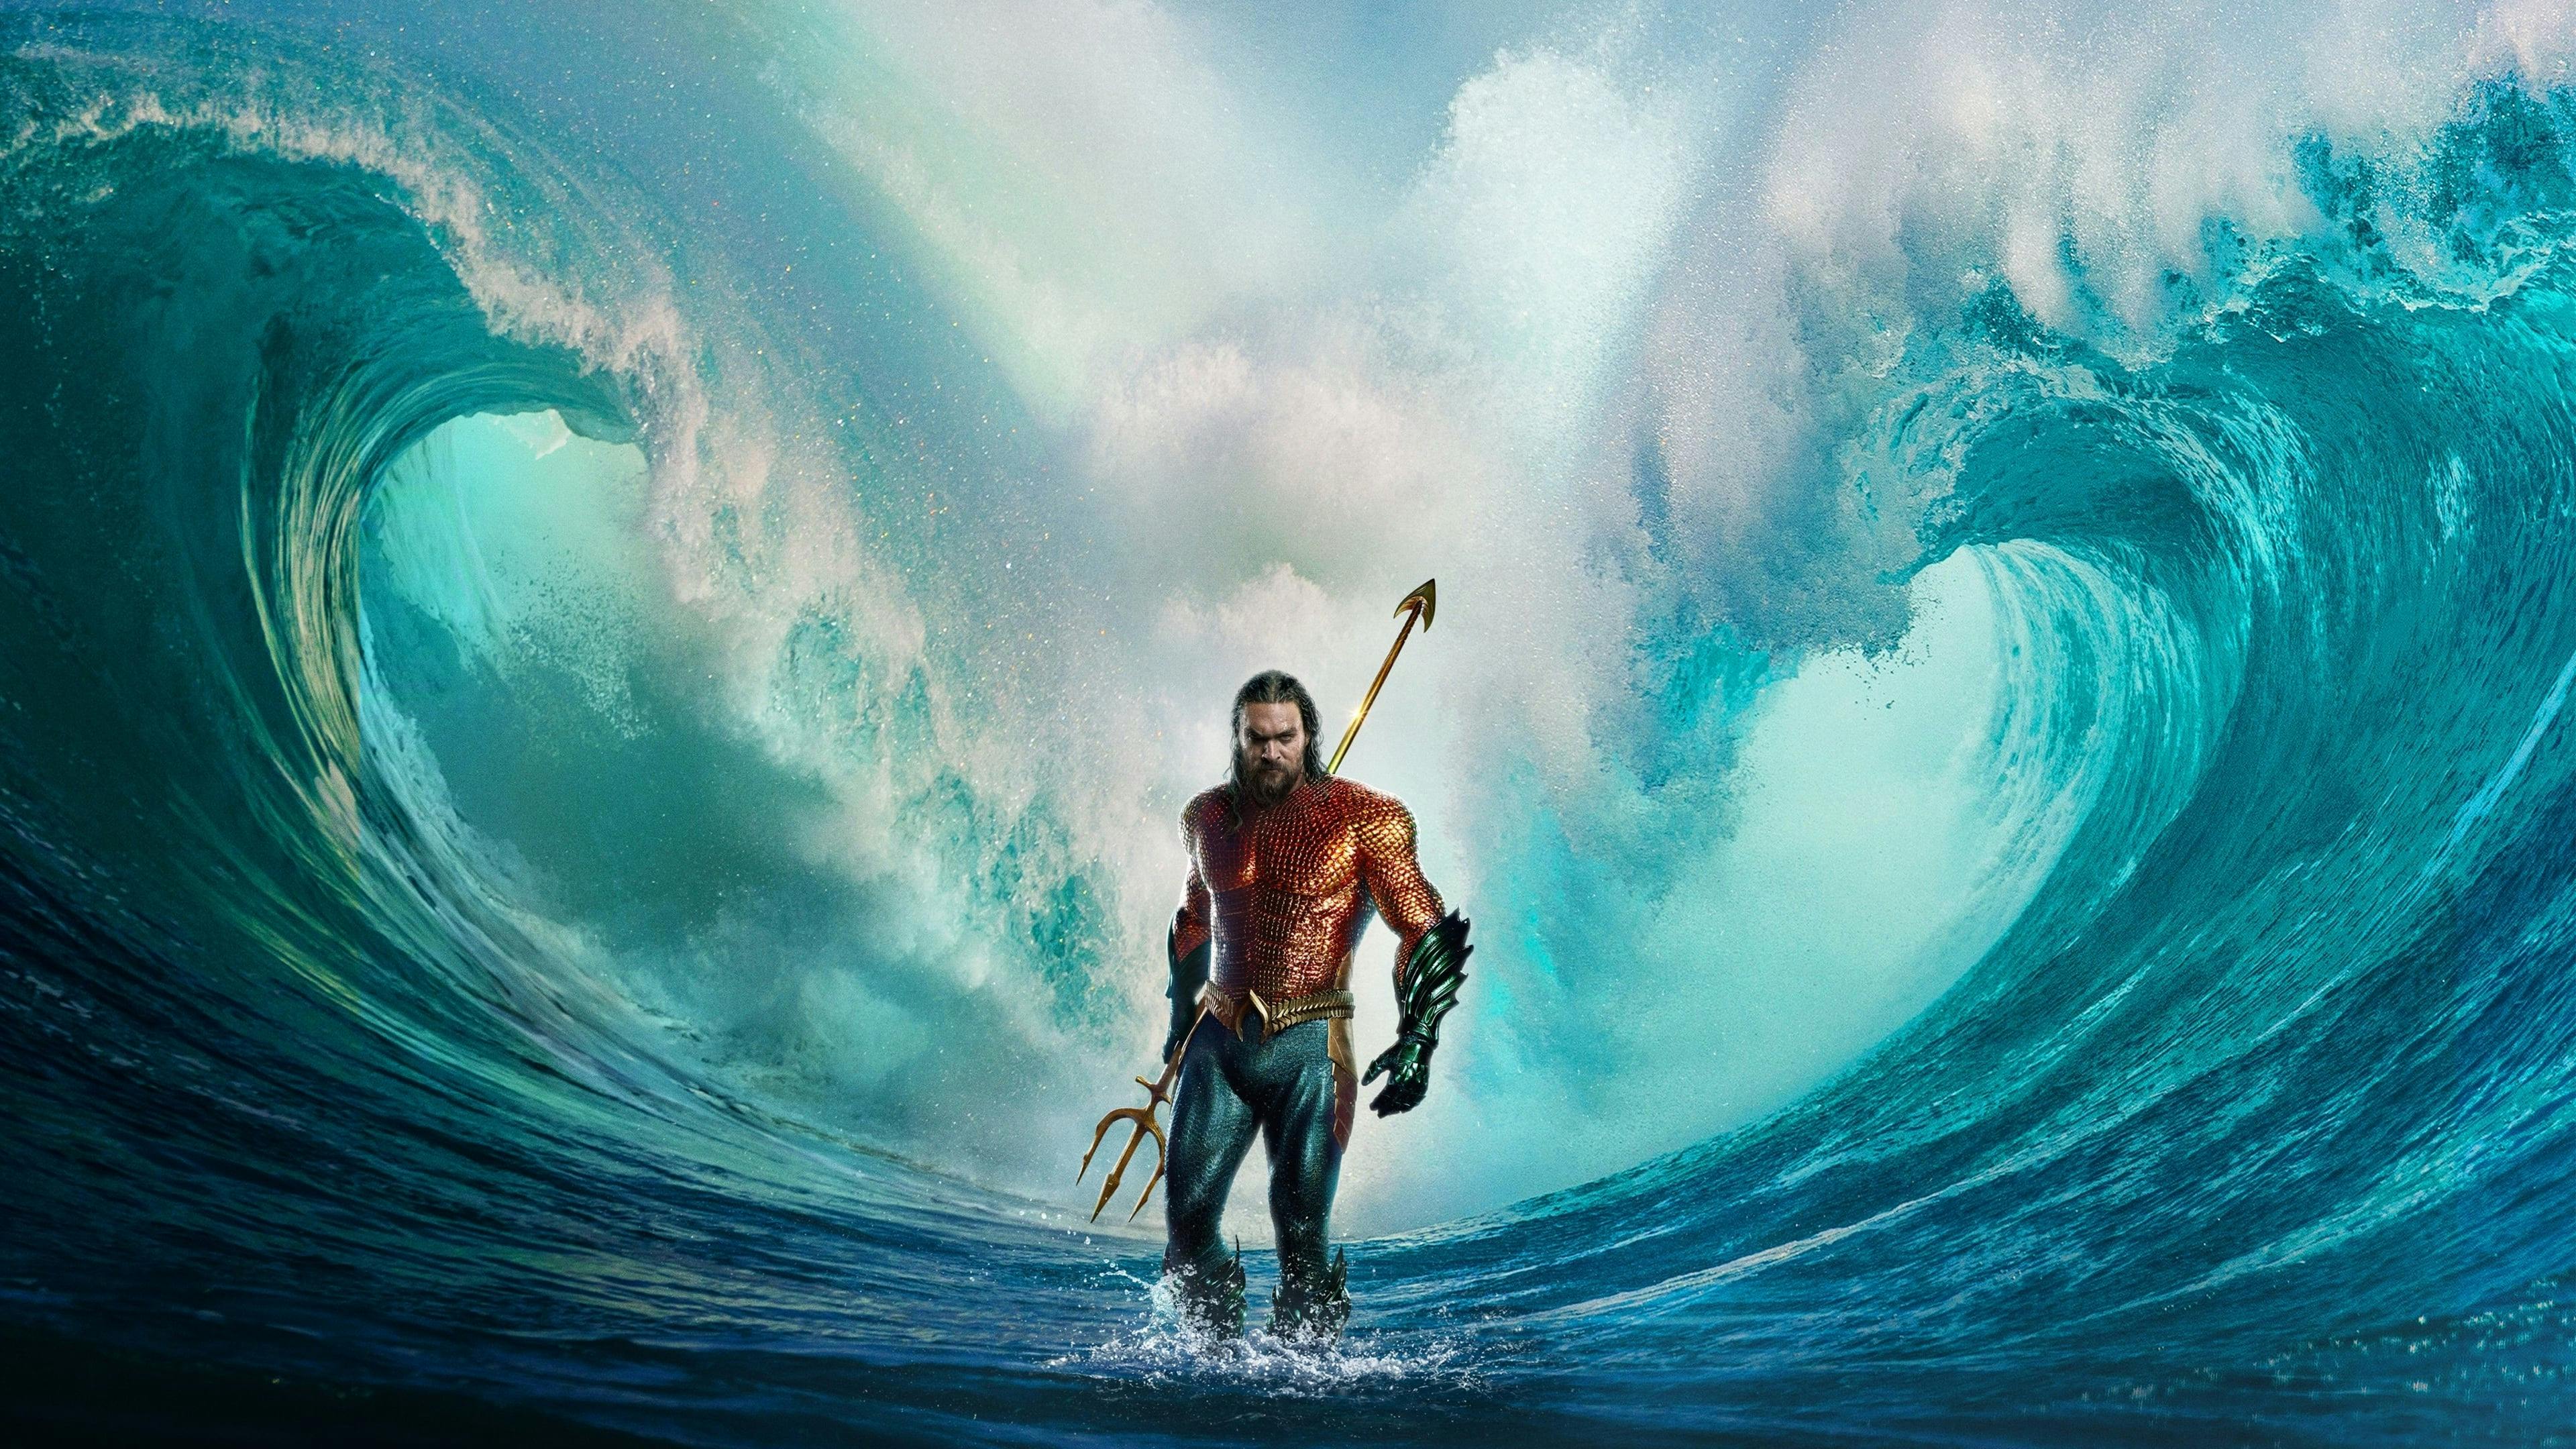 Aquaman 2 is set to hit Nigerian Cinemas in December